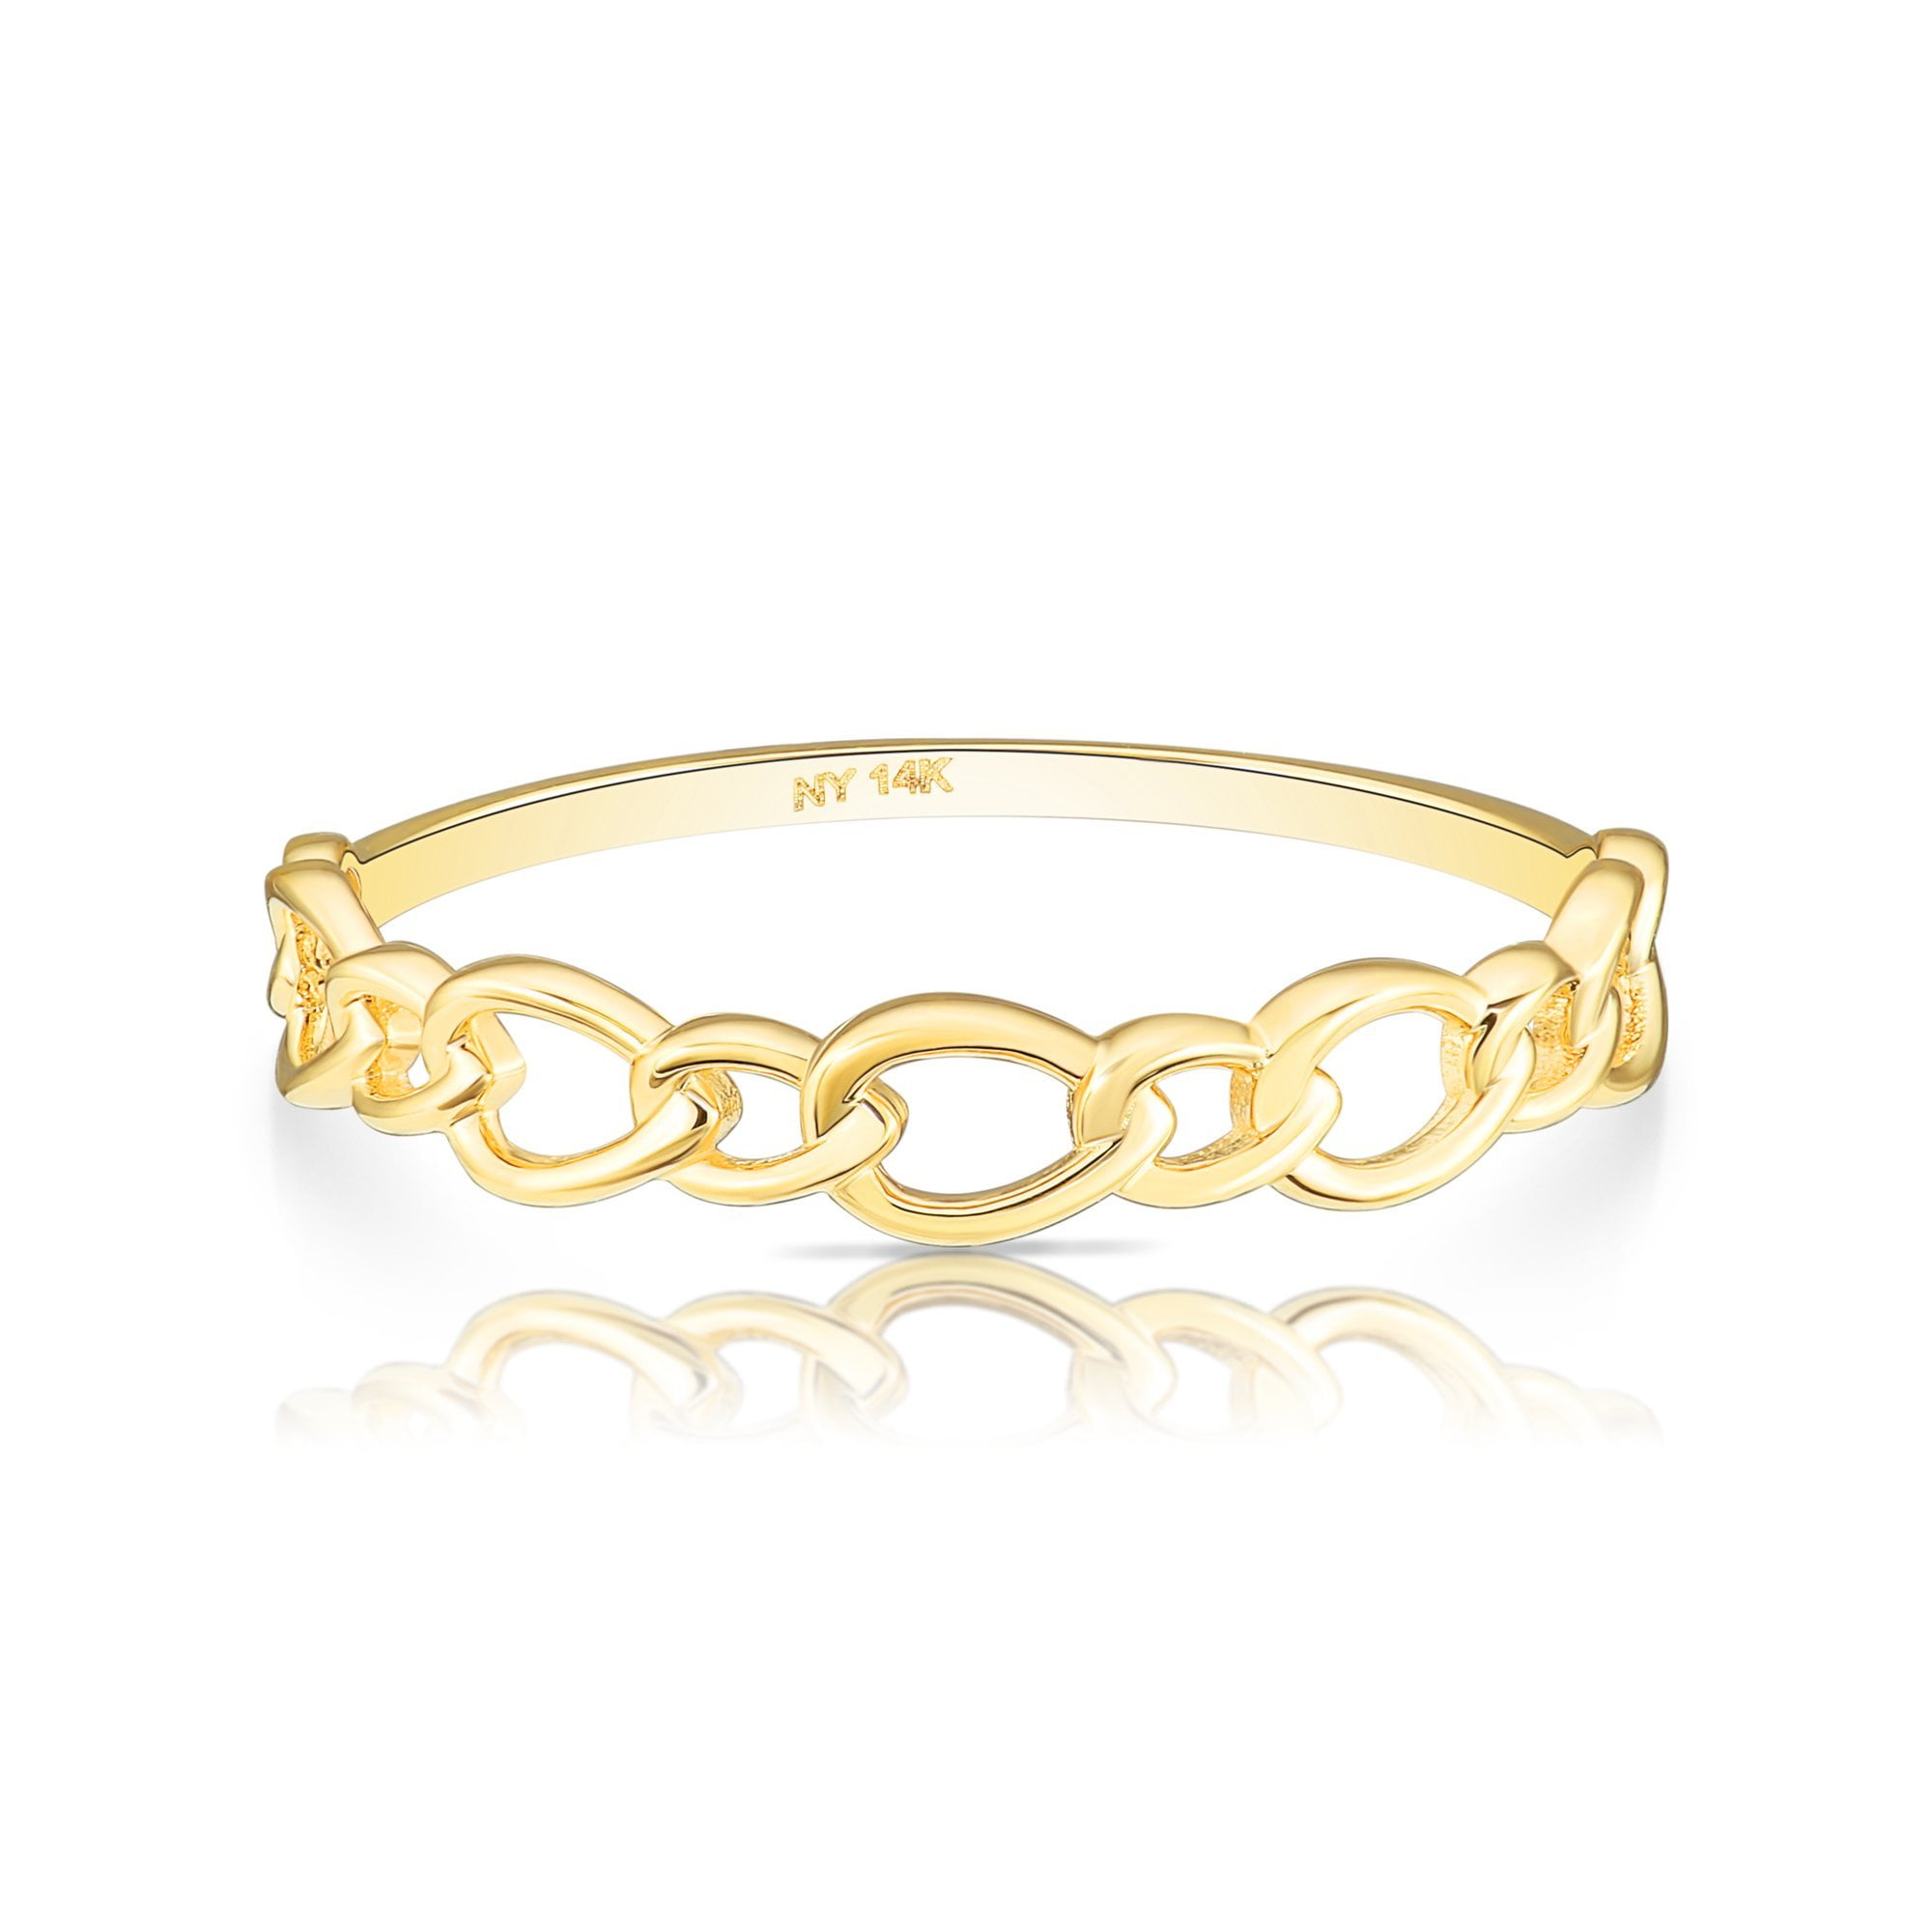 Tilo Jewelry 14K Yellow Gold Cuban Link Style Dainty Ring - Size 5 - Women, Girls